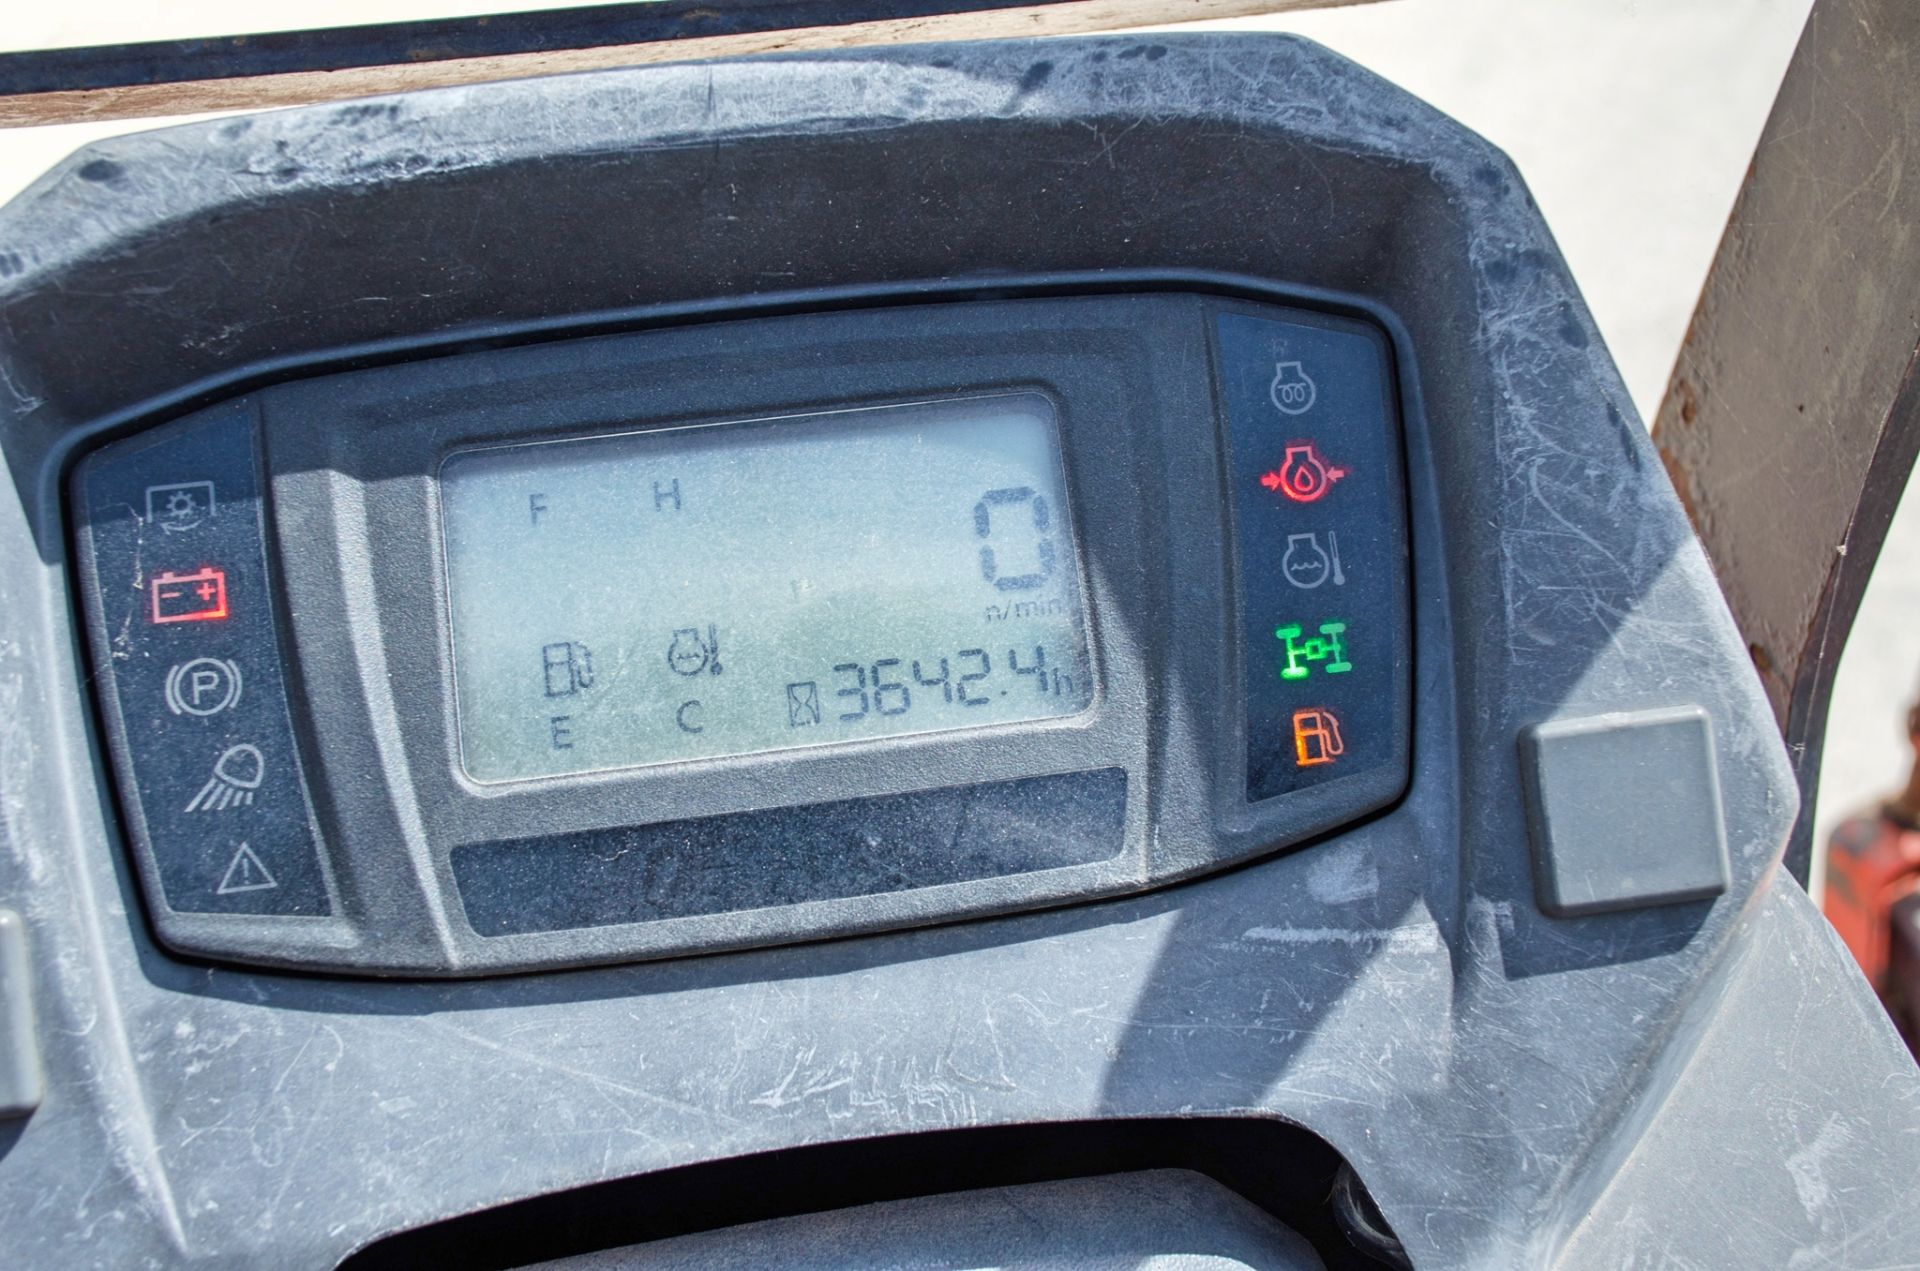 Kubota 3890 diesel driven ride on lawnmower Year: 2014 S/N: 10147 Recorded Hours: 3642 - Image 14 of 15